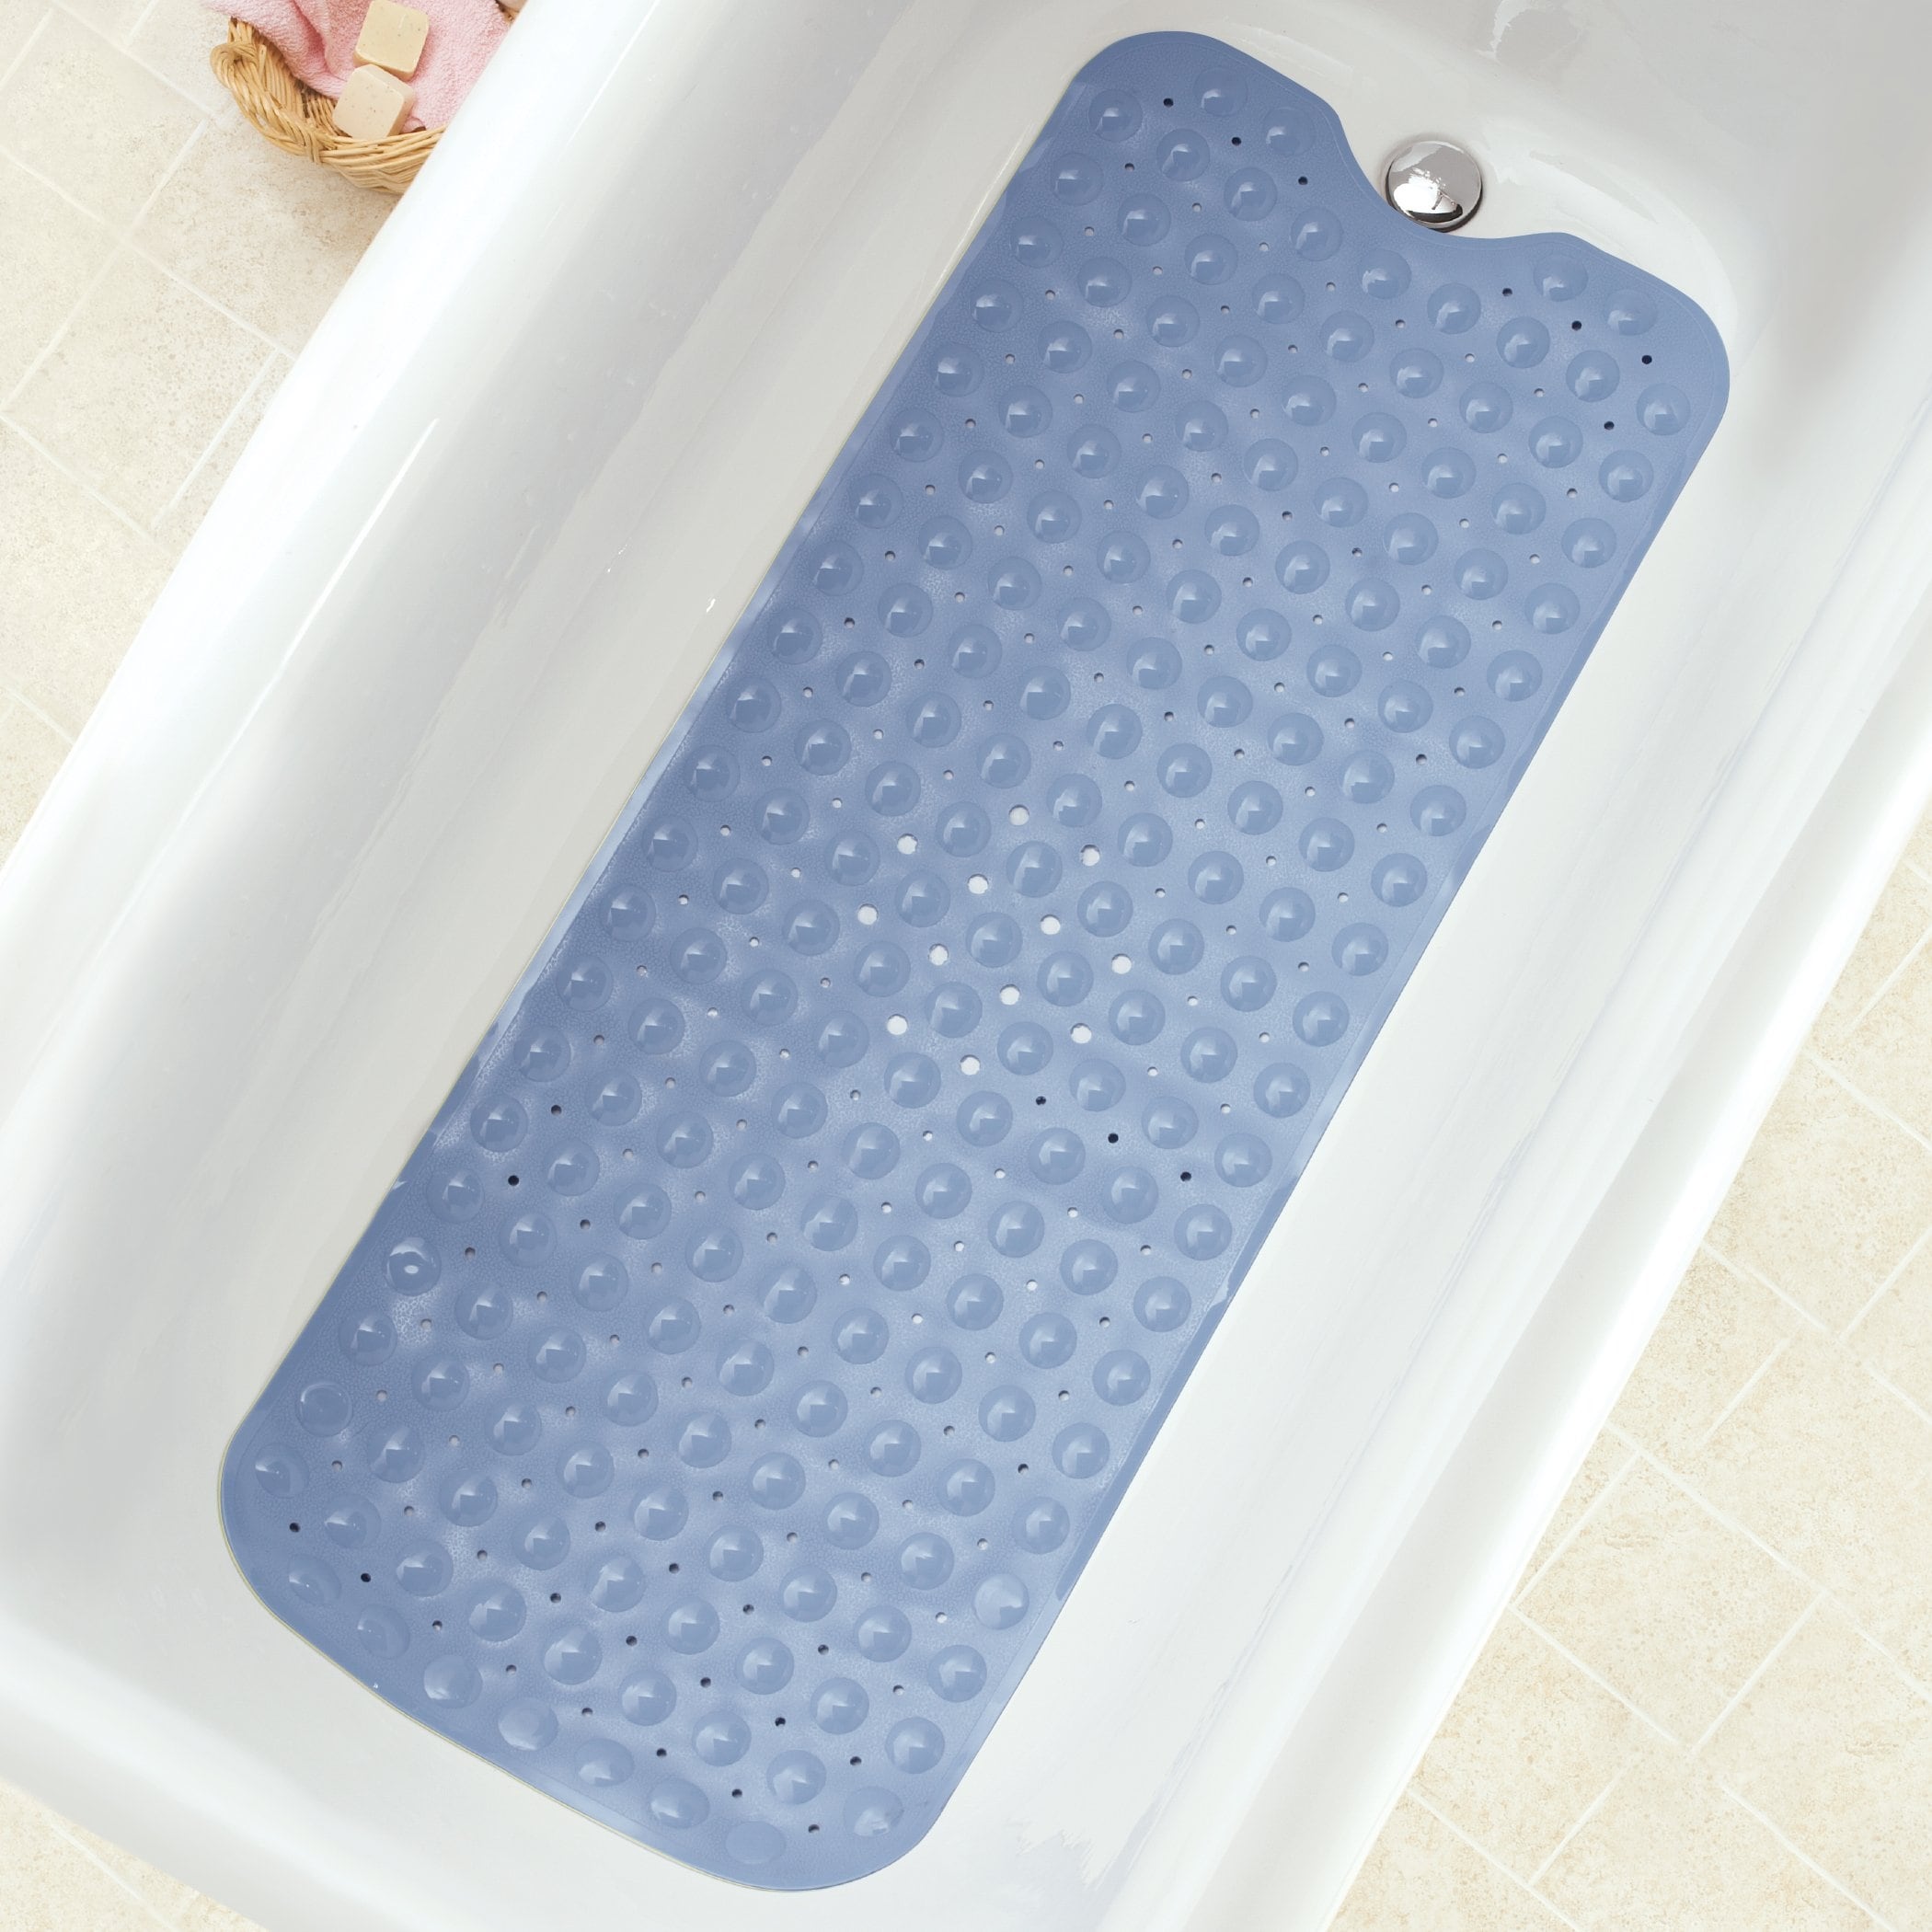 Bubbles Non-Slip Oval Bathtub Mat 28 L x 15 W - On Sale - Bed Bath & Beyond  - 28303138